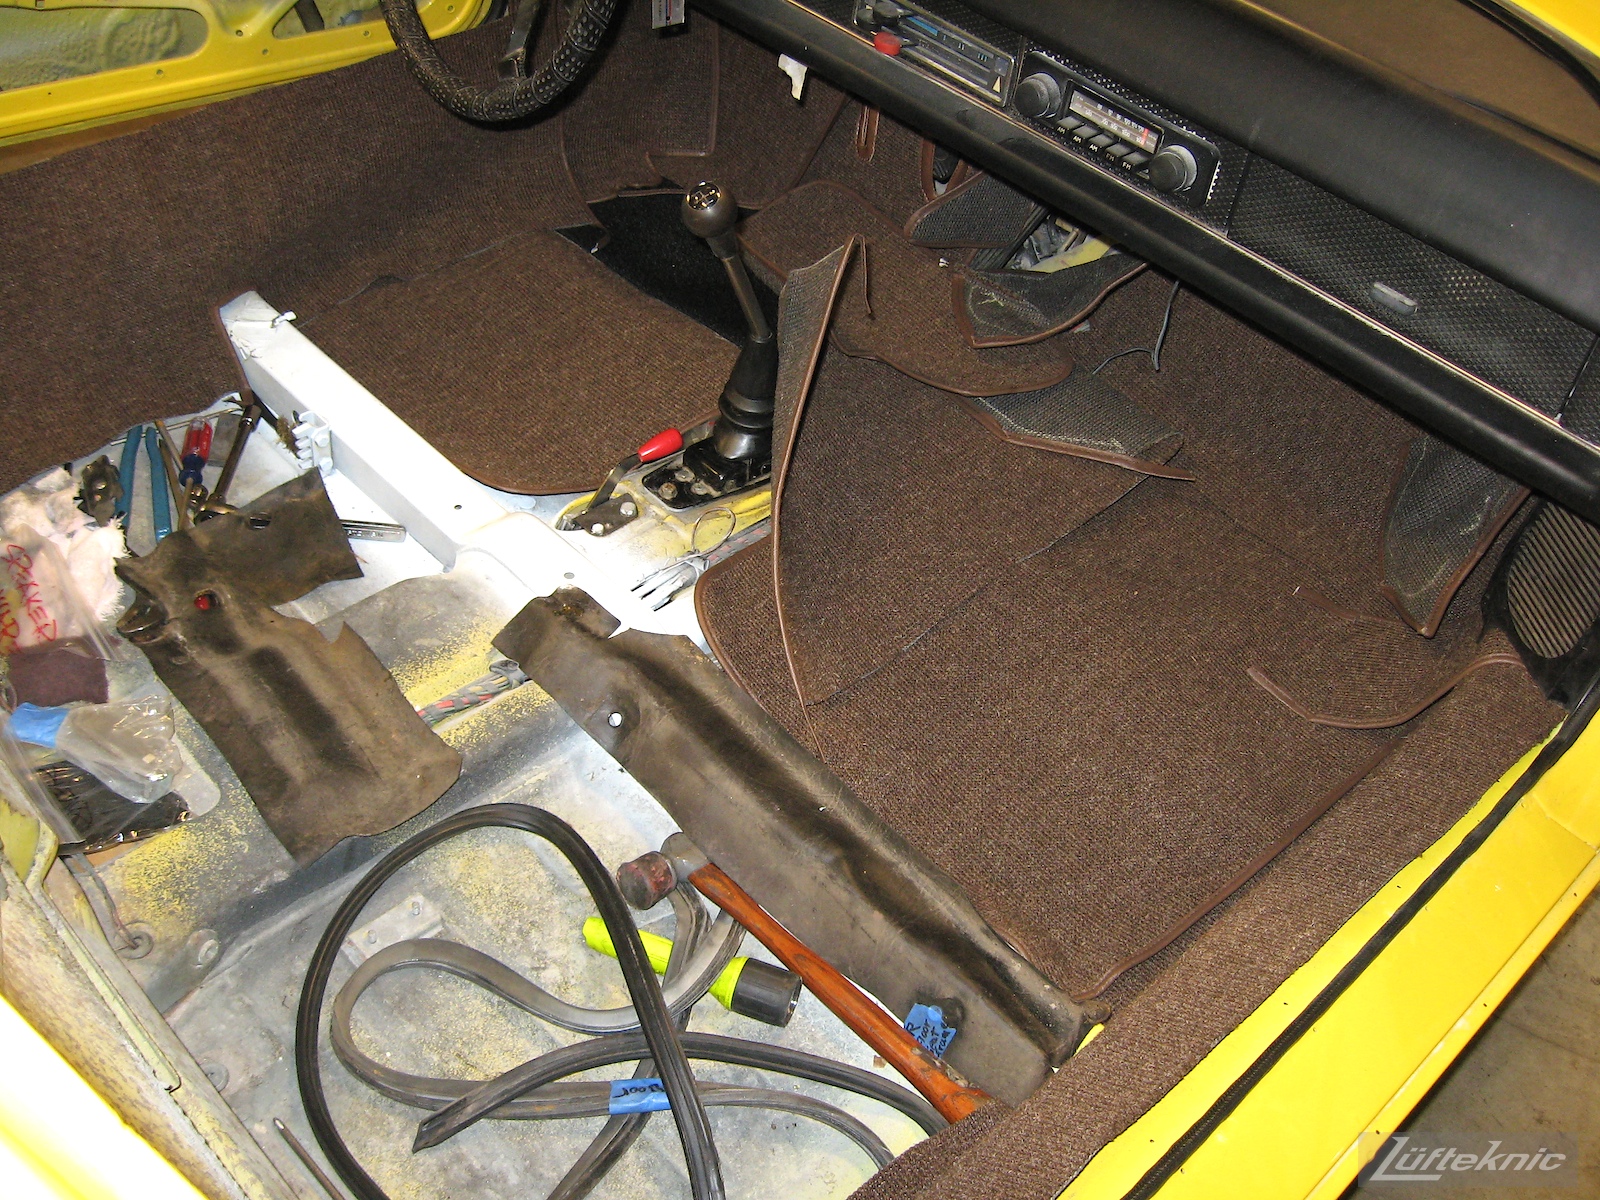 Interior carpets being installed into a yellow Porsche 914 being restored by Lufteknic.